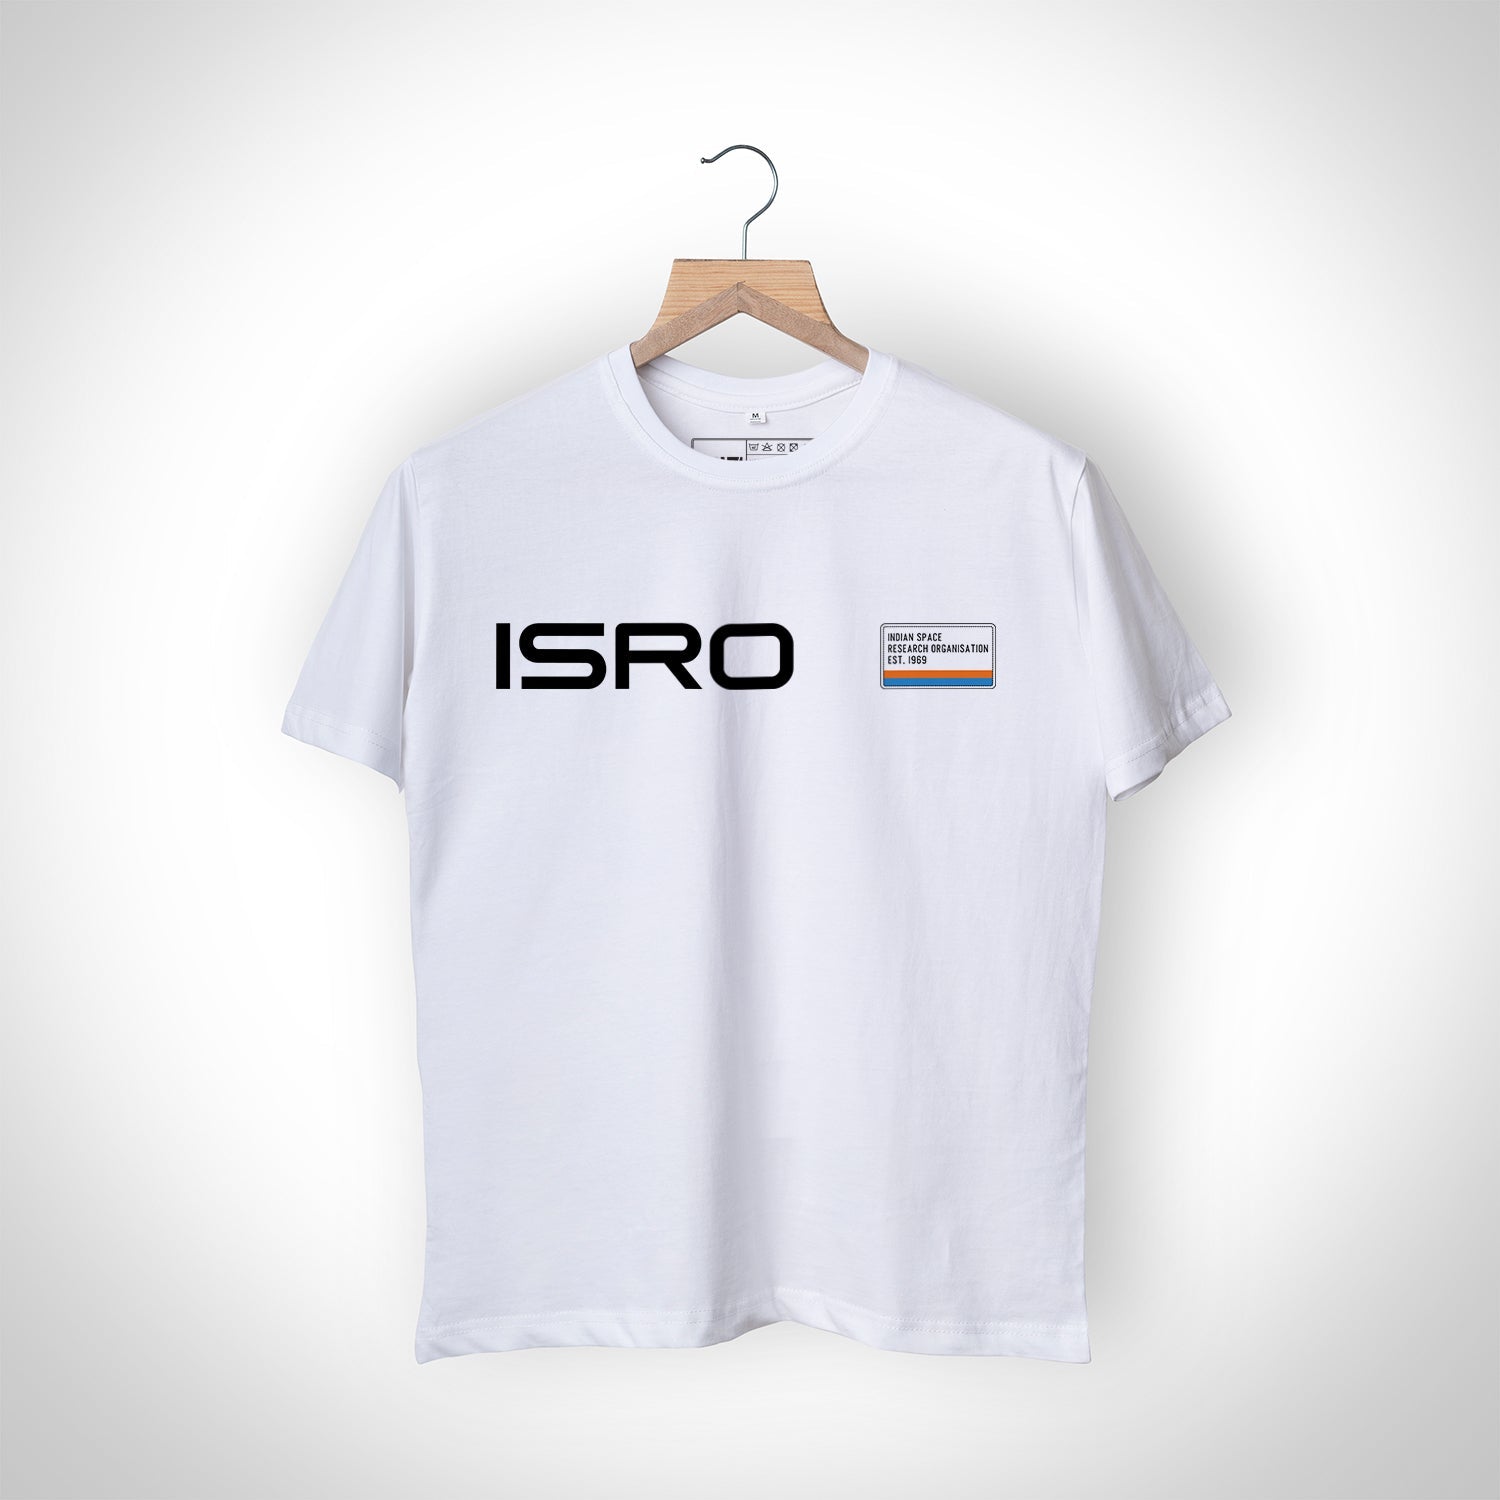 ISRO White Satish Dhawan Space Centre T-Shirt -A47 - India - www.superherotoystore.com